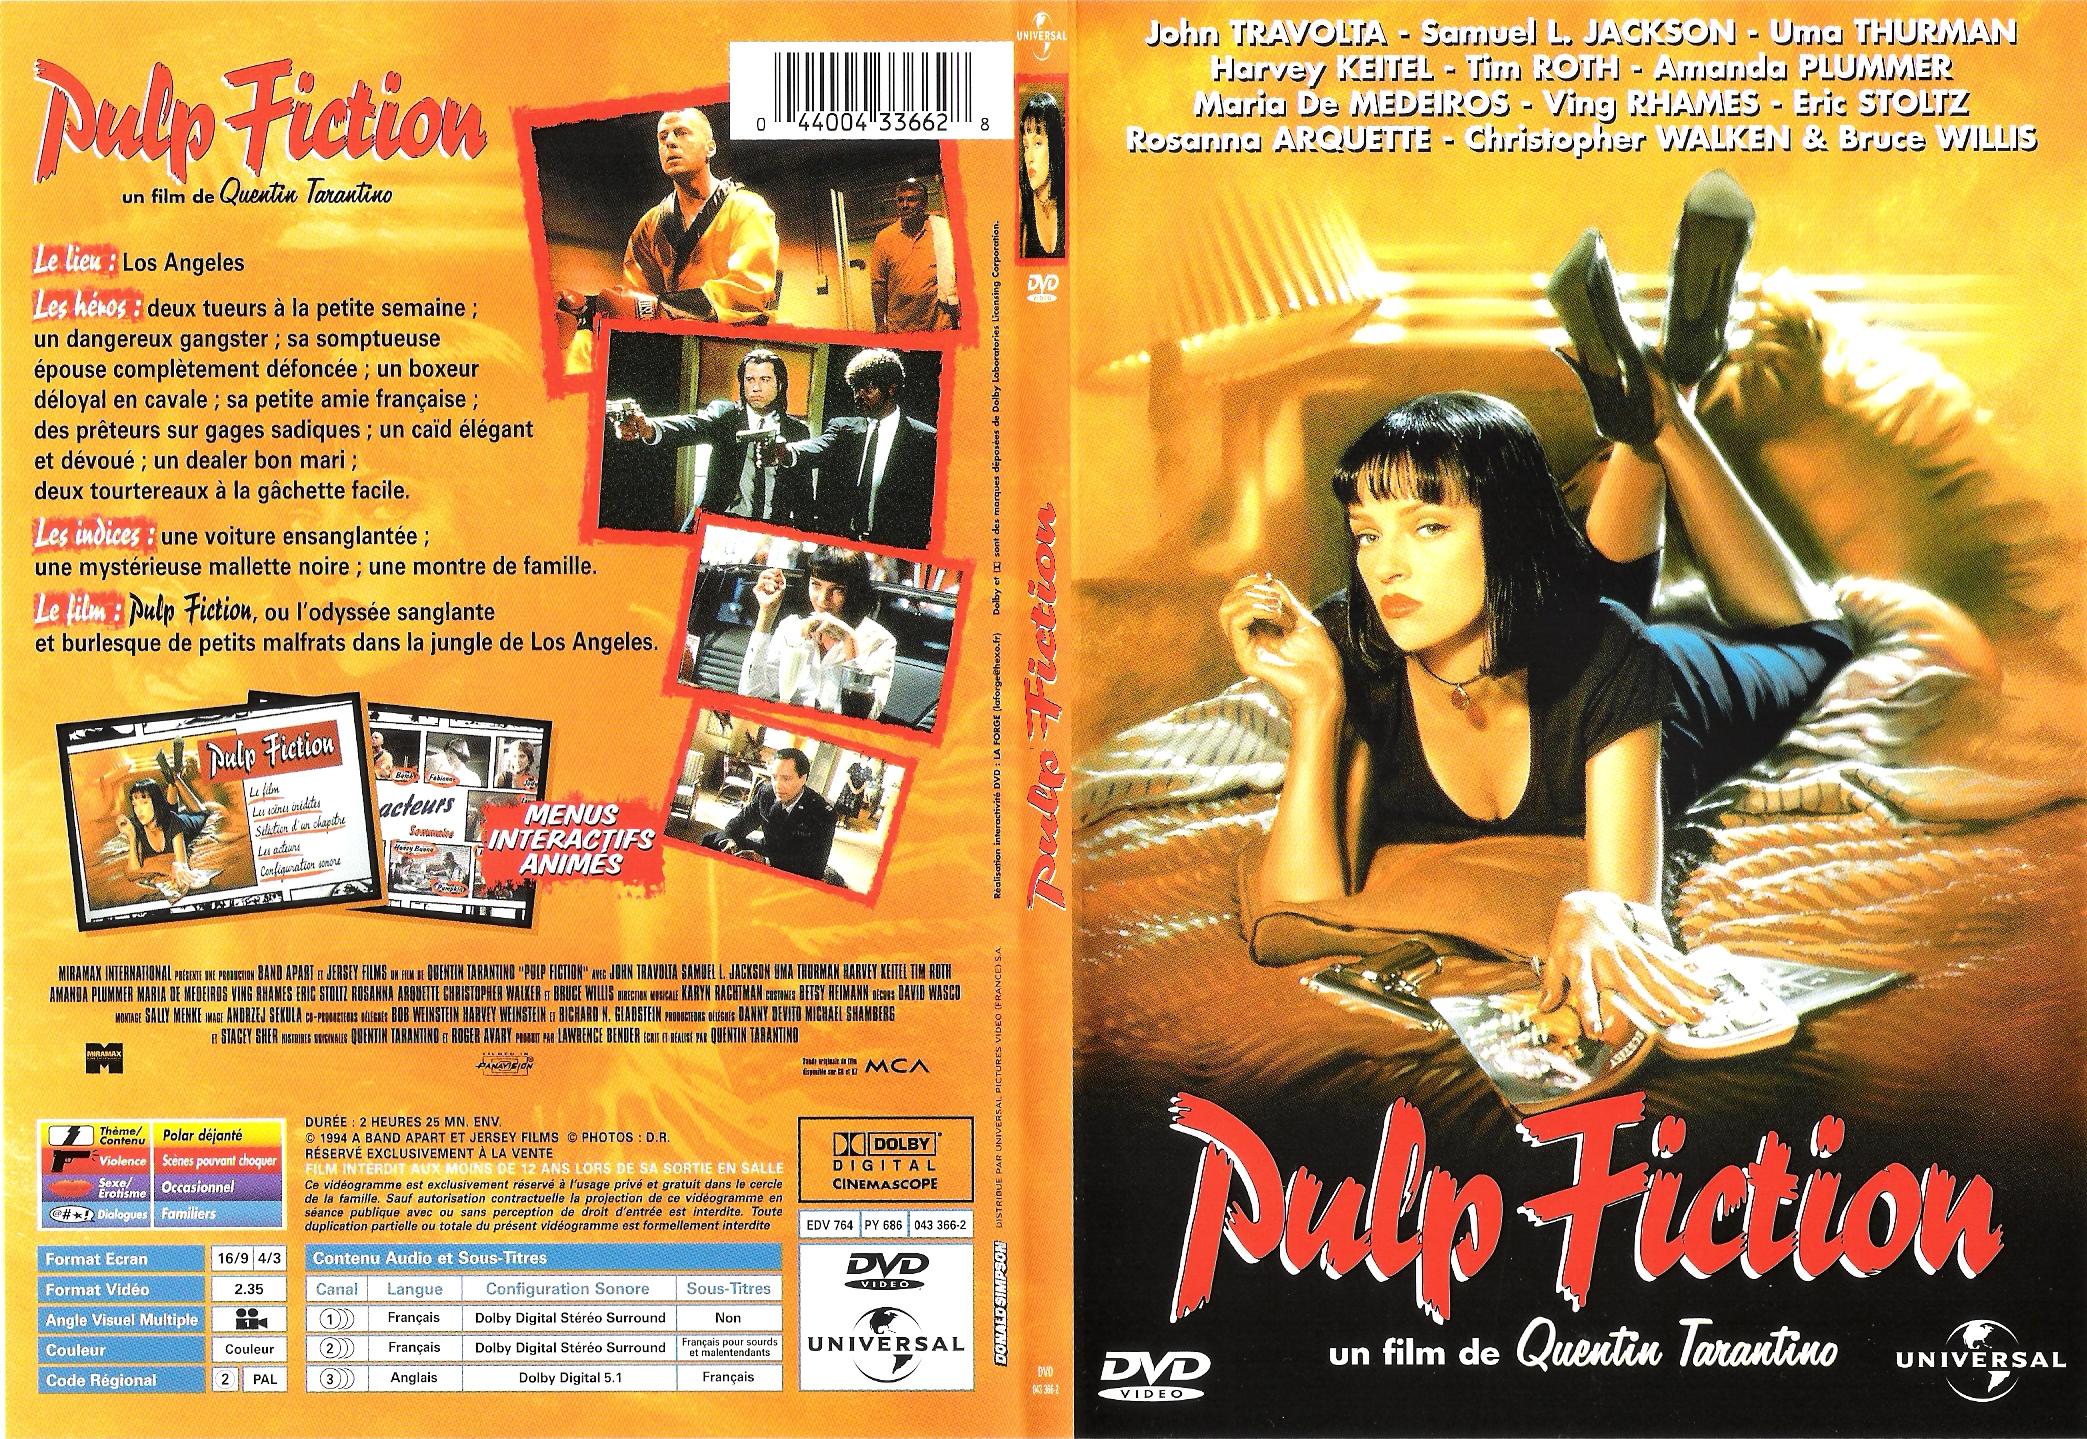 Jaquette DVD Pulp Fiction - SLIM v2